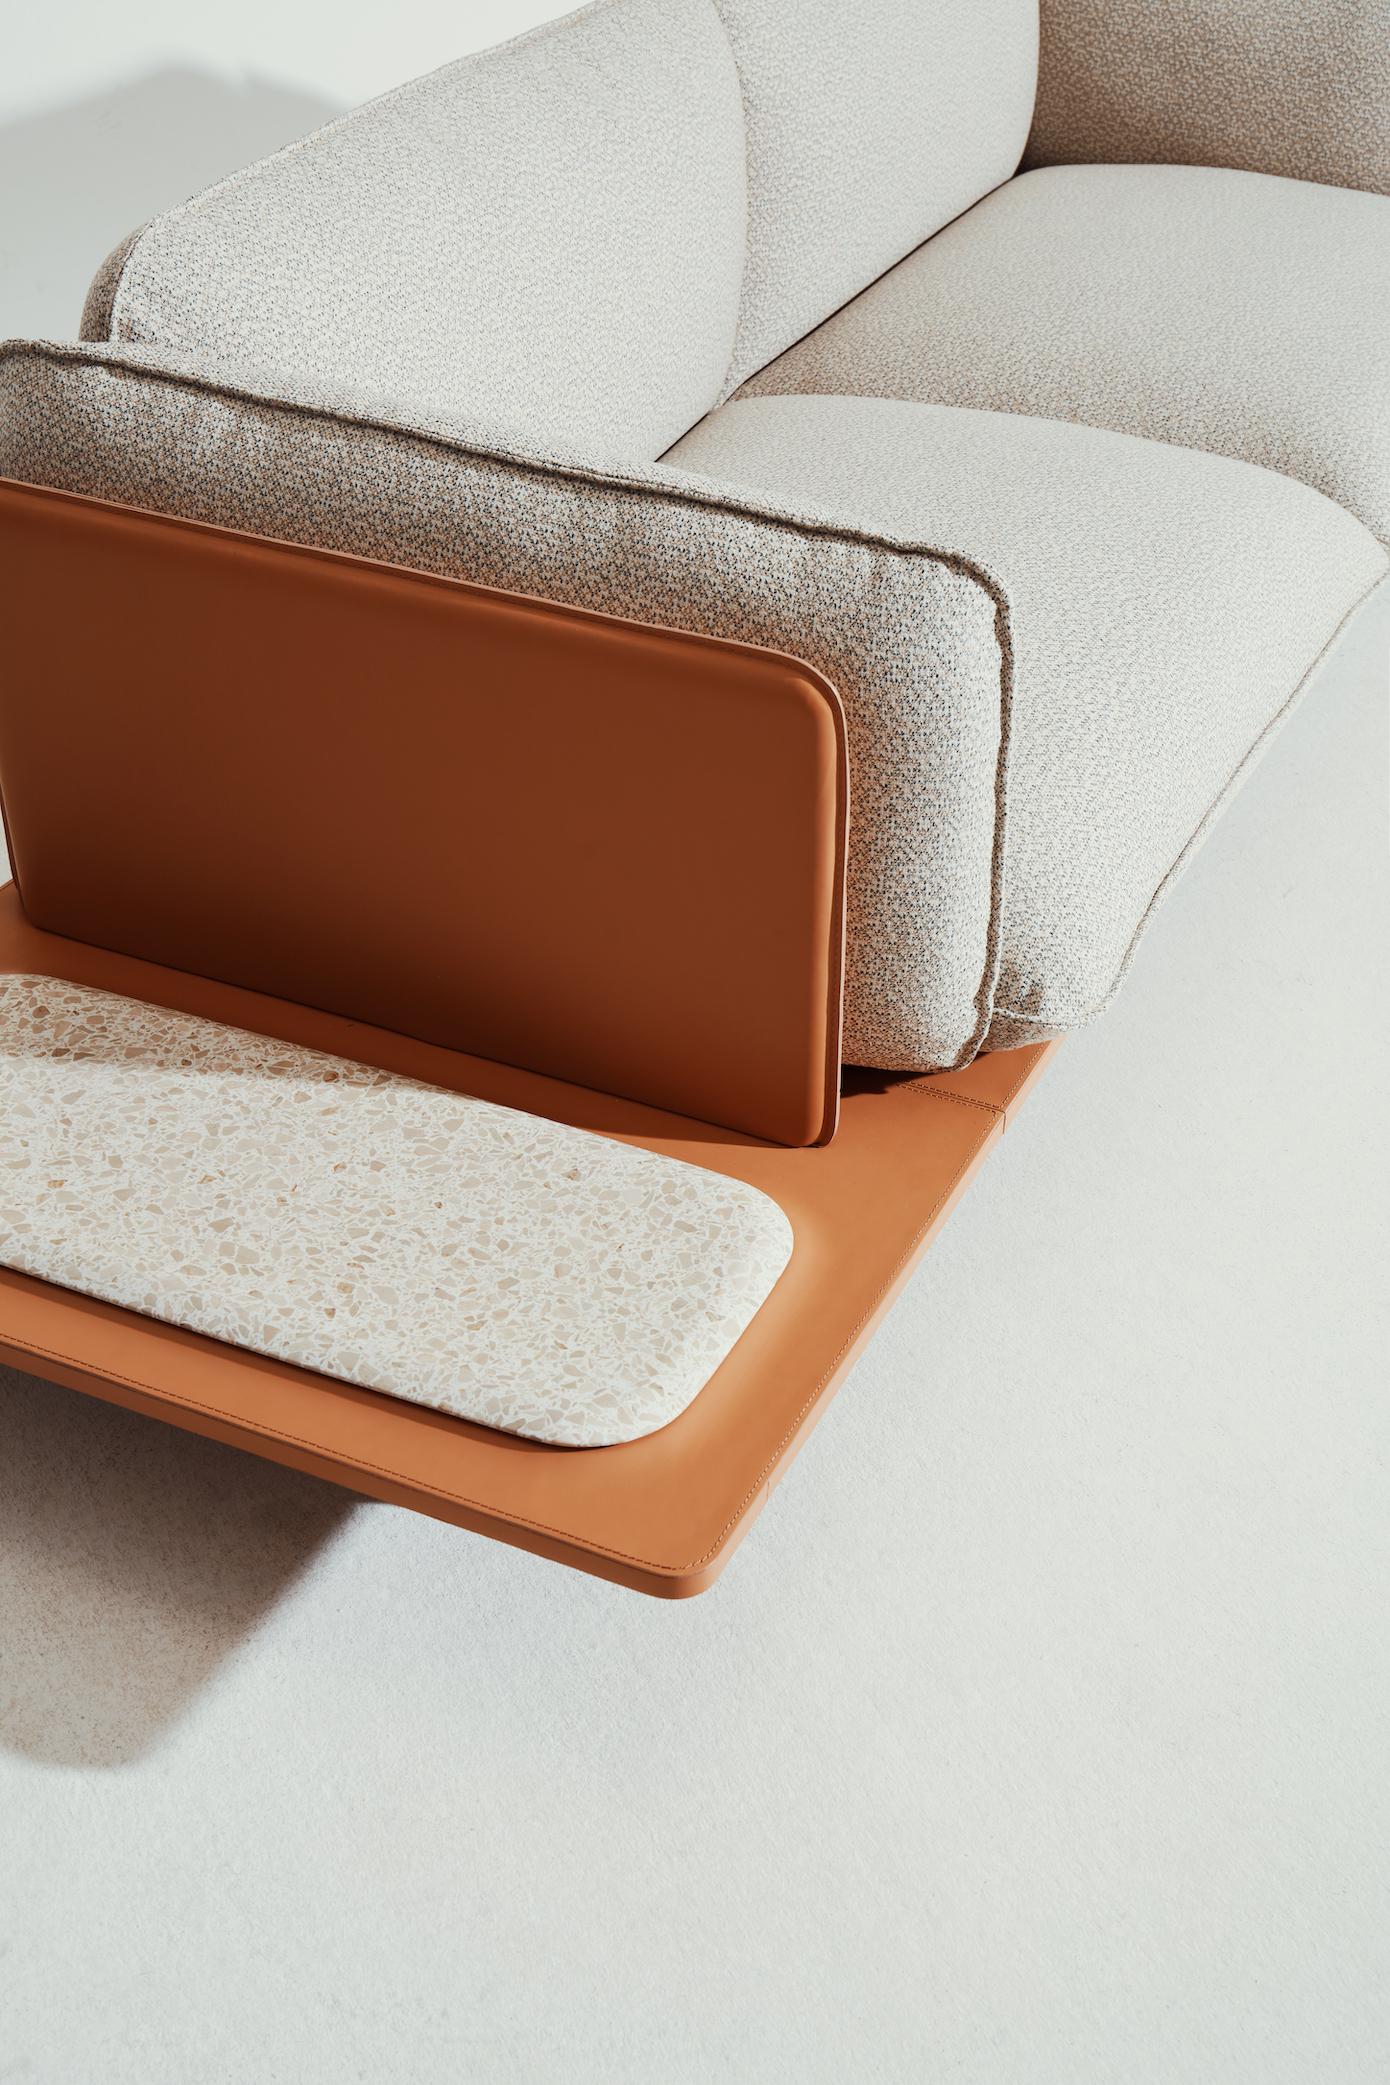 Anpassbares La Manufacture-Paris Sahara Sofa Design von Noé Duchaufour-Lawrance (Italienisch) im Angebot